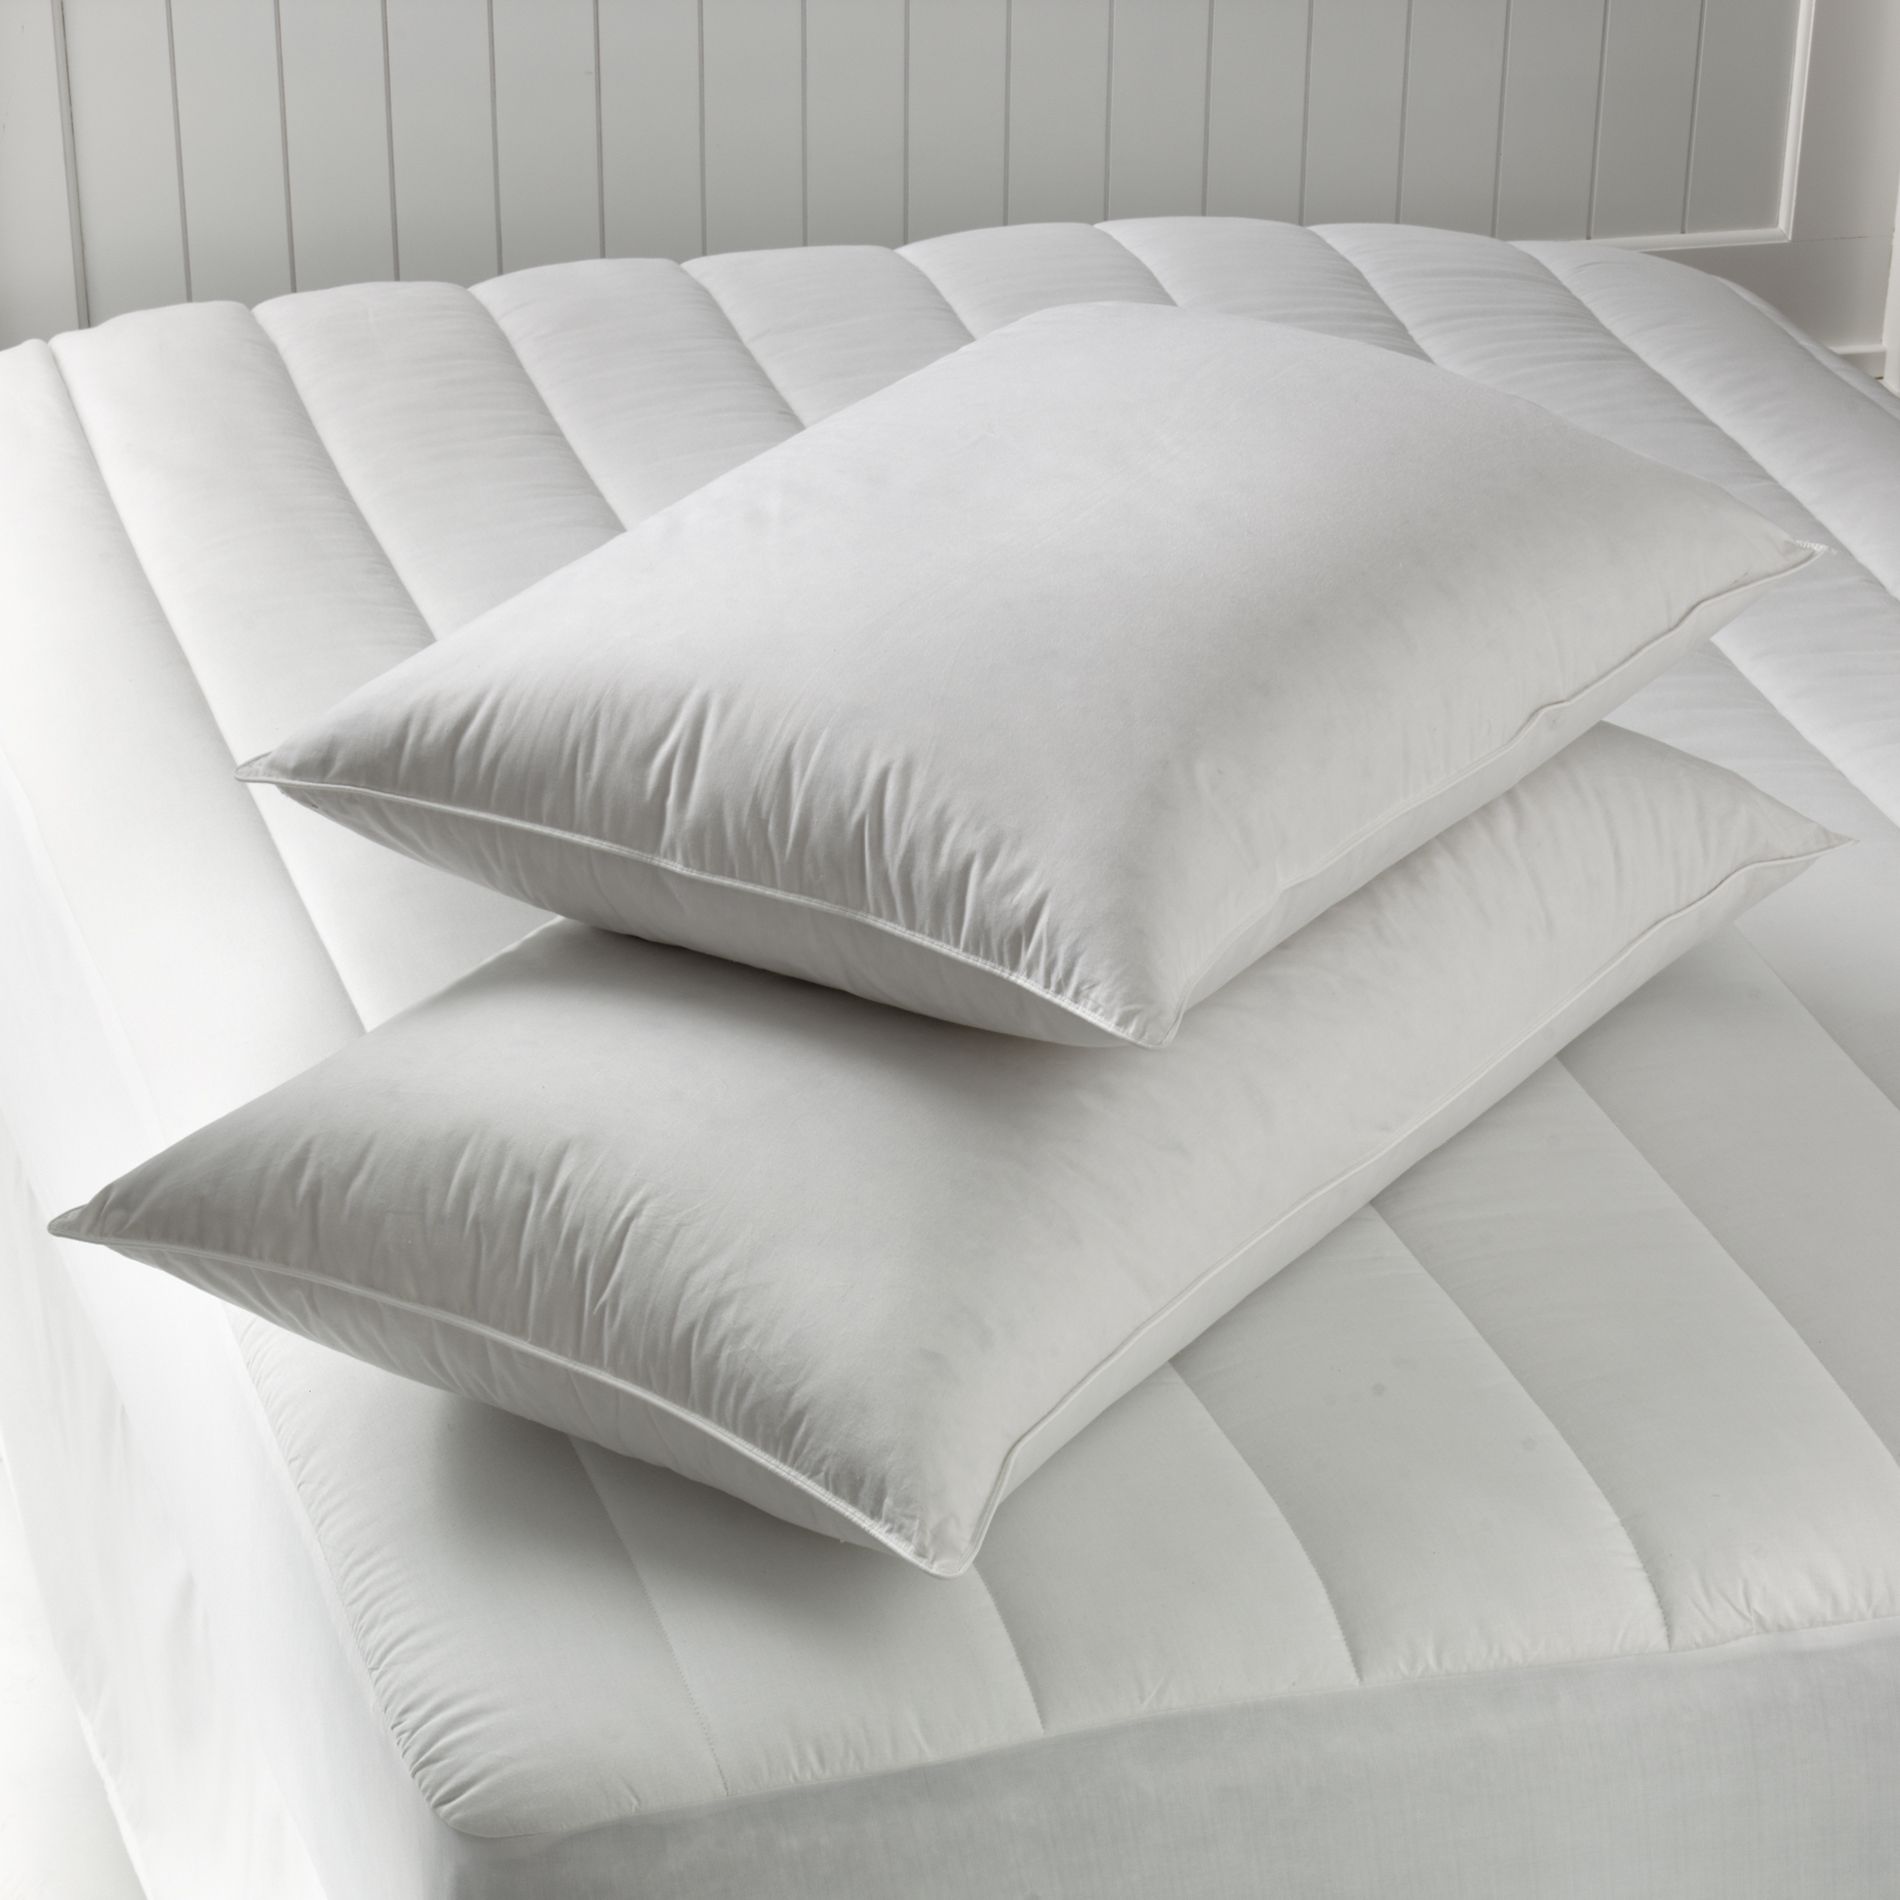 Utica Supersize Down Pillow - King